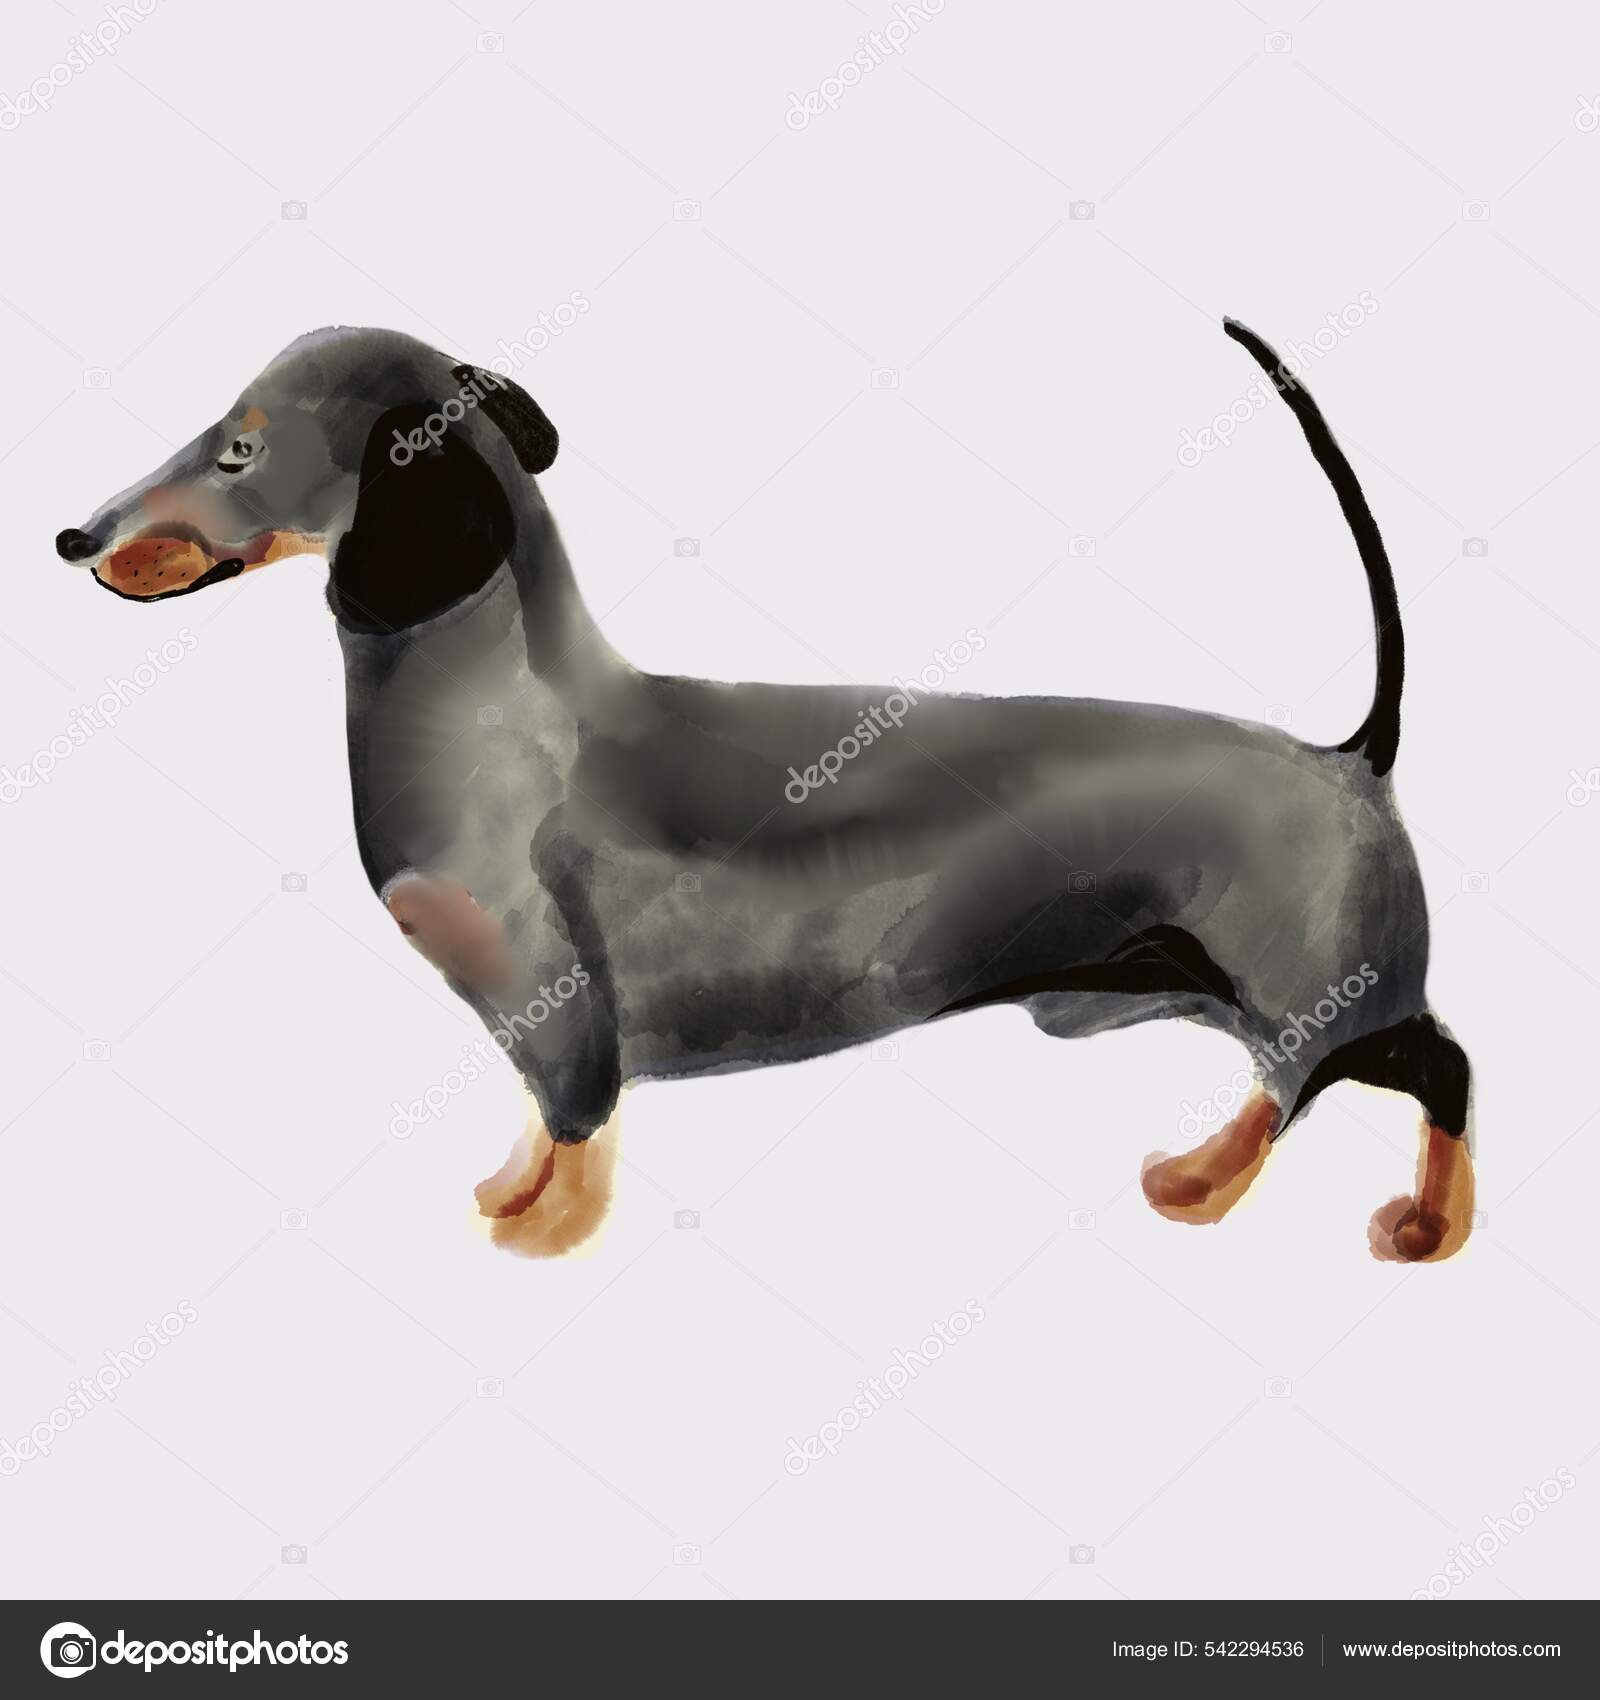 https://st.depositphotos.com/27127598/54229/i/1600/depositphotos_542294536-stock-photo-dog-illustration-cute-home-animals.jpg